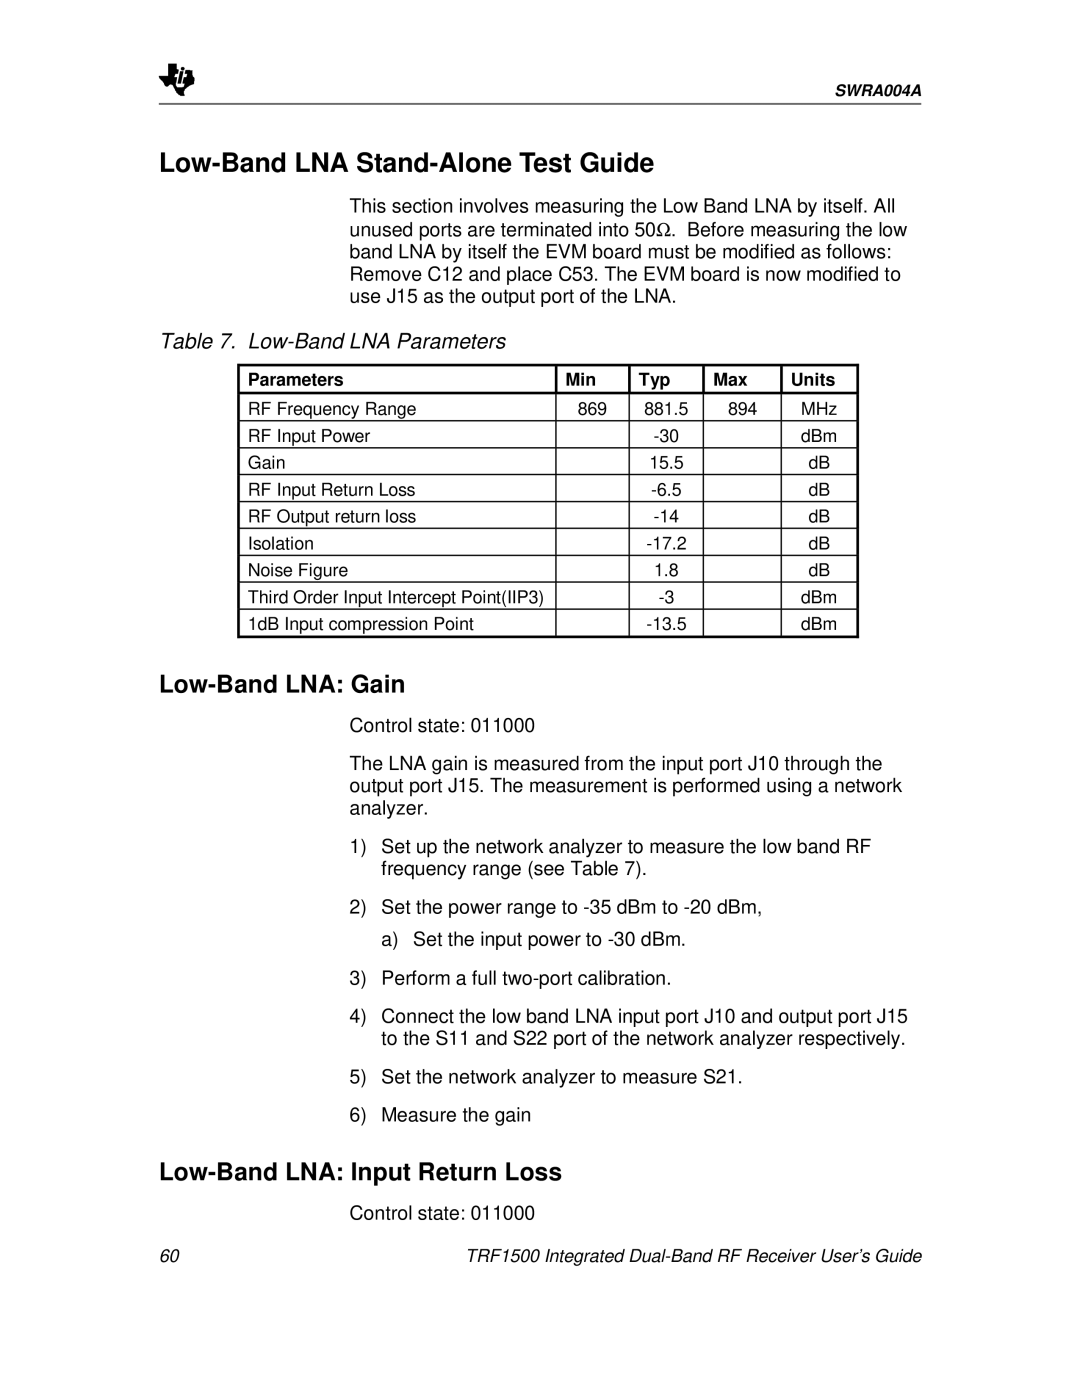 Texas Instruments TRF1500 manual Low-BandLNA Stand-AloneTest Guide, Low-BandLNA Gain, Low-BandLNA Input Return Loss 